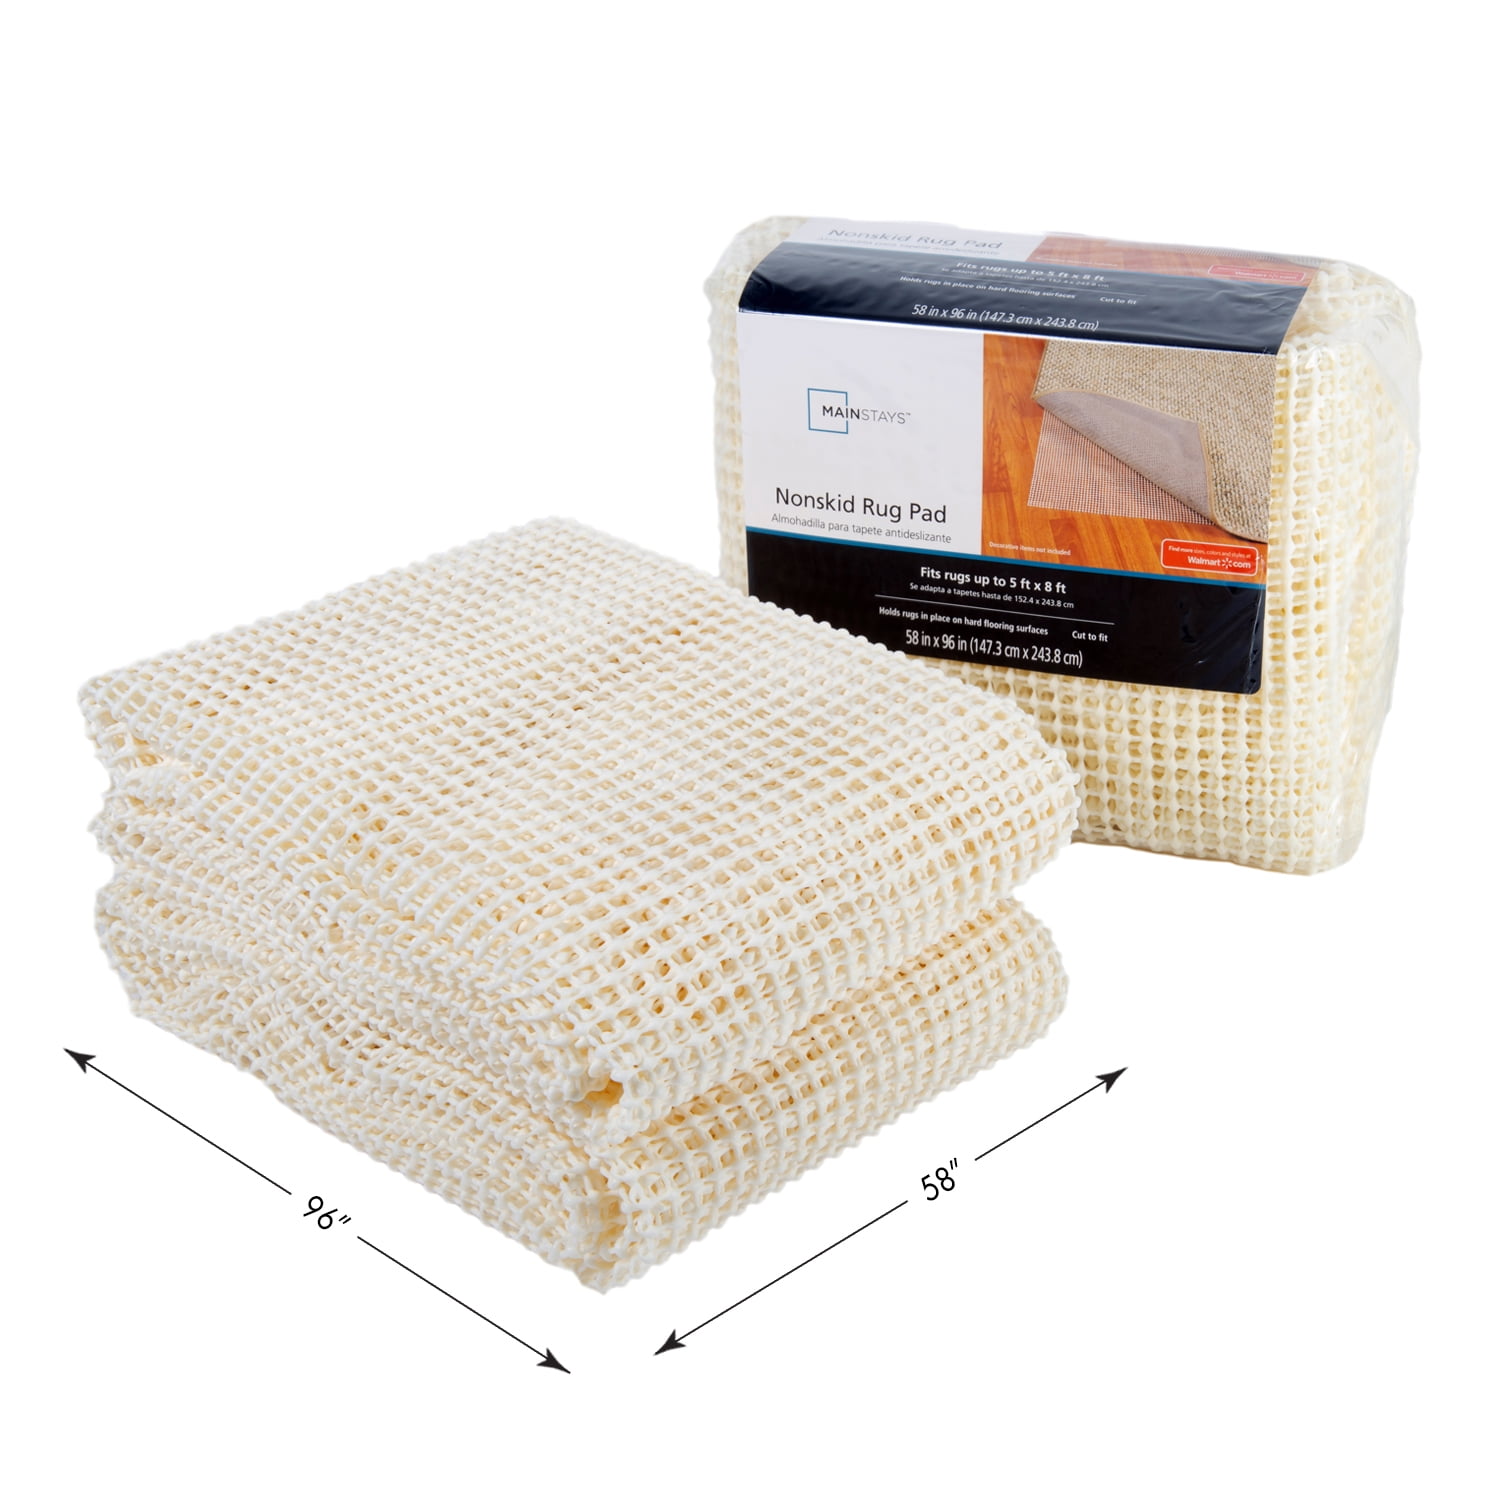 Slipnot Non-Slip Rug Cushion 5x8 new in orig packaging 